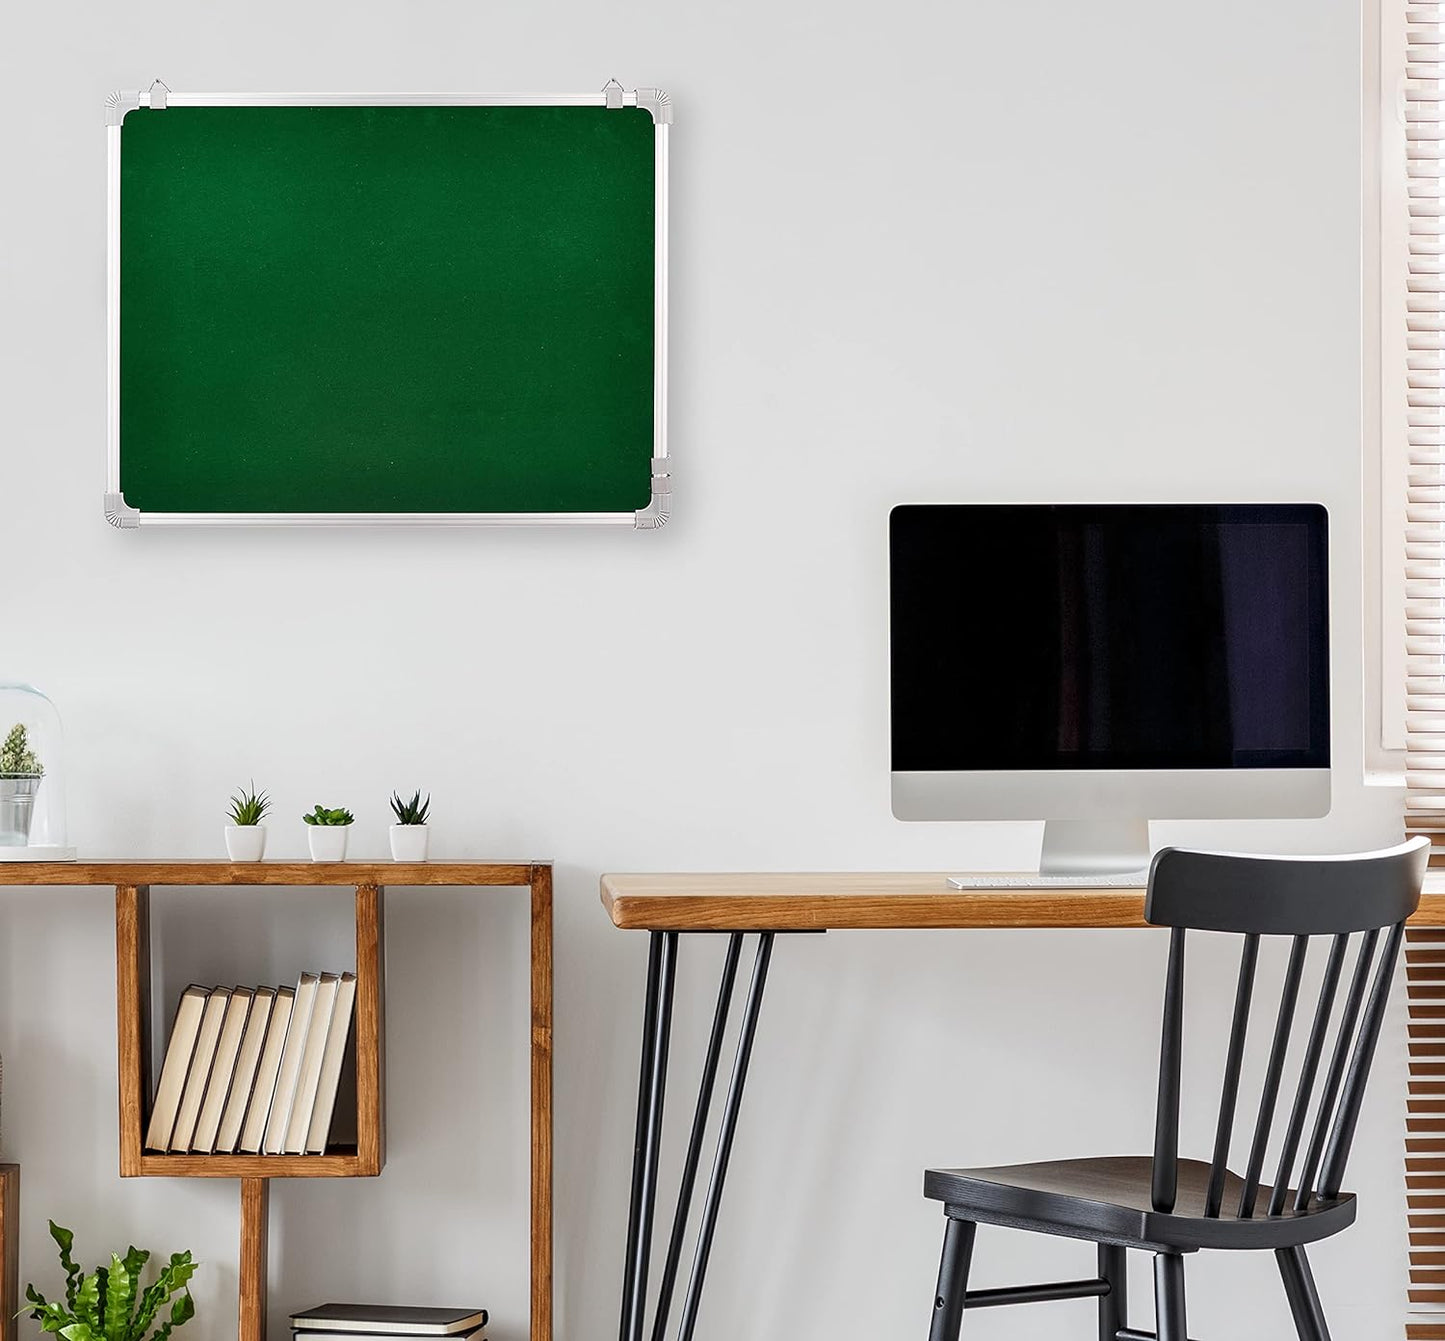 Digismart Noticeboard Nova Channel (Green) for Office, Home & School Aluminum Frame (Pack of 1) (Non Magnetic)